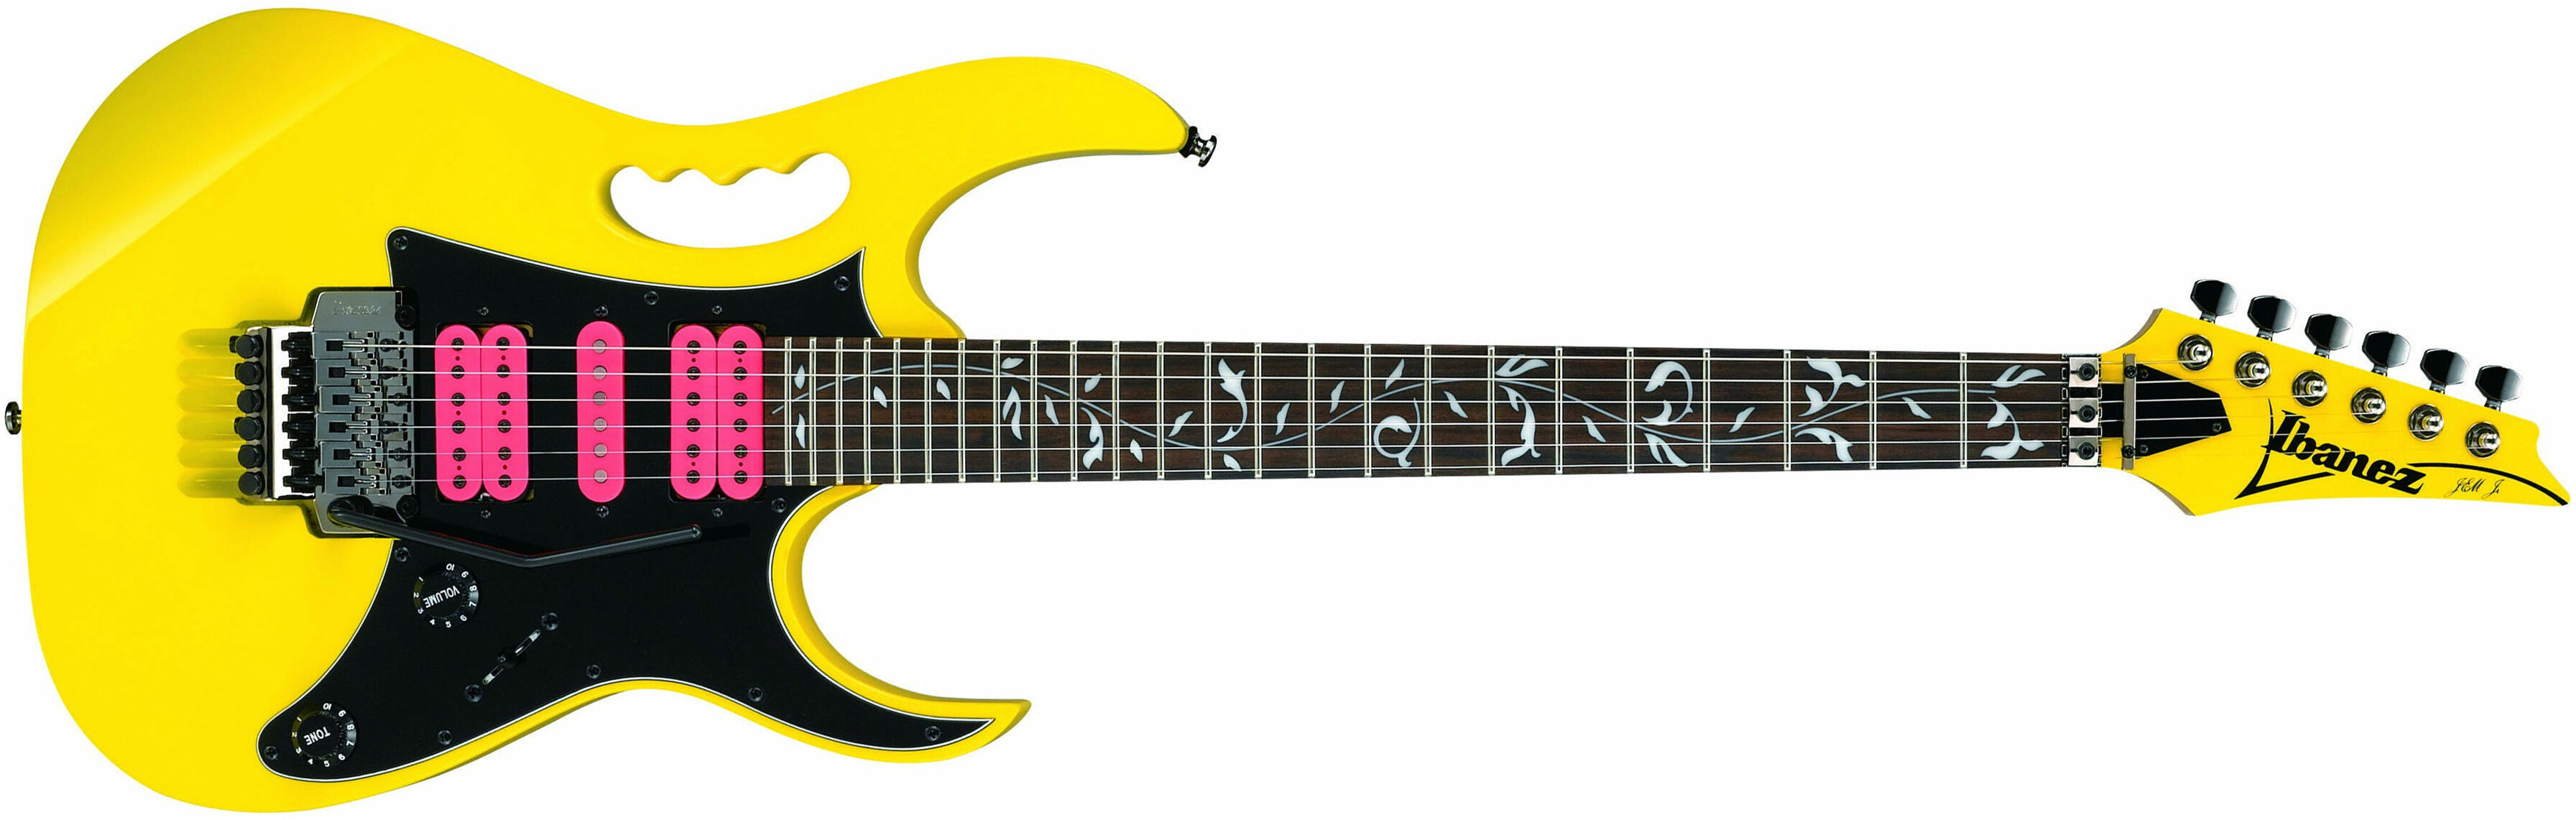 Ibanez Steve Vai Jemjr Ye Signature Hsh Fr Rw - Yellow - Str shape electric guitar - Main picture